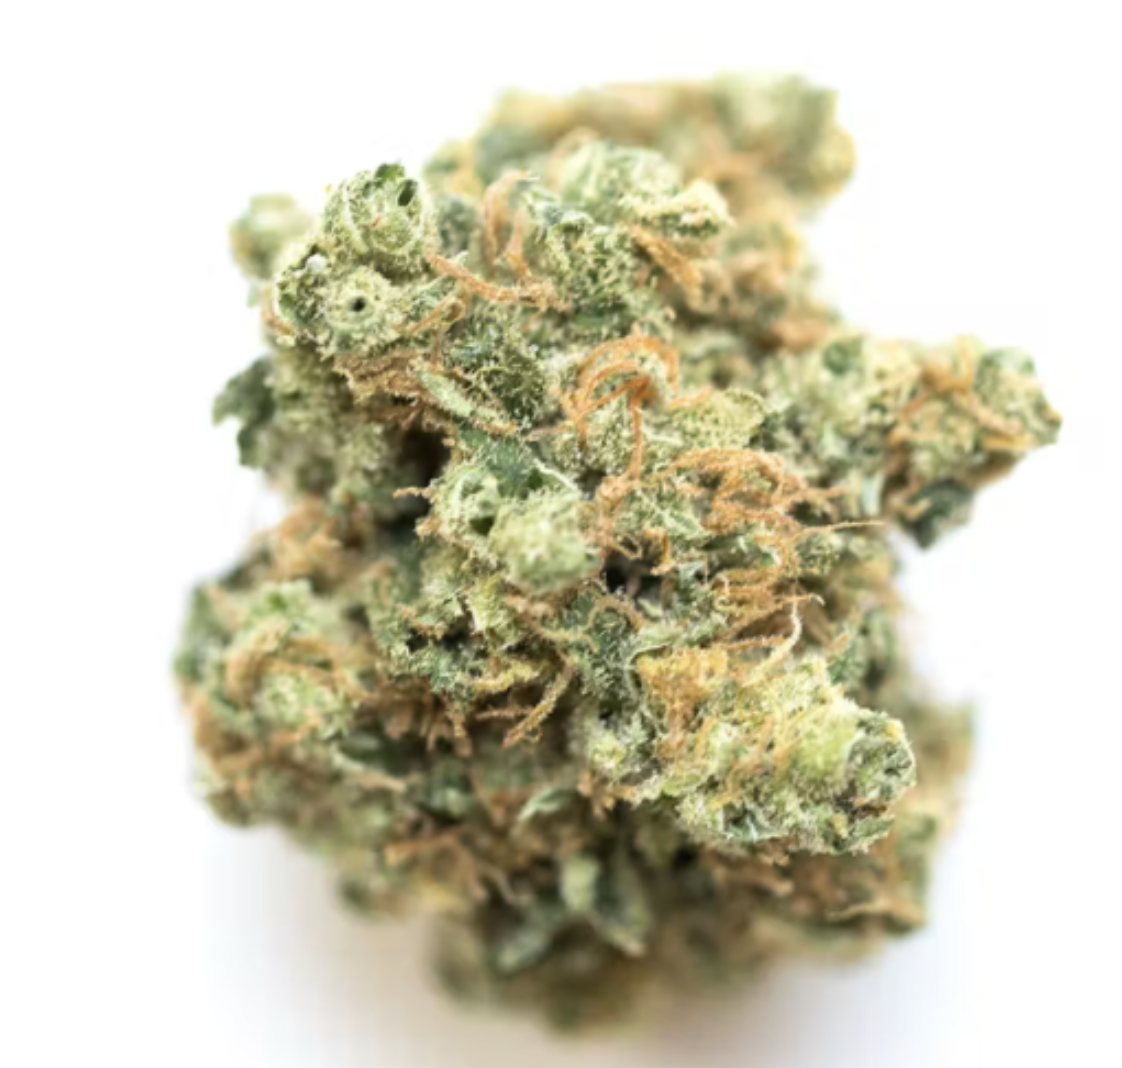 Pineapple Silver Haze cannabis strain